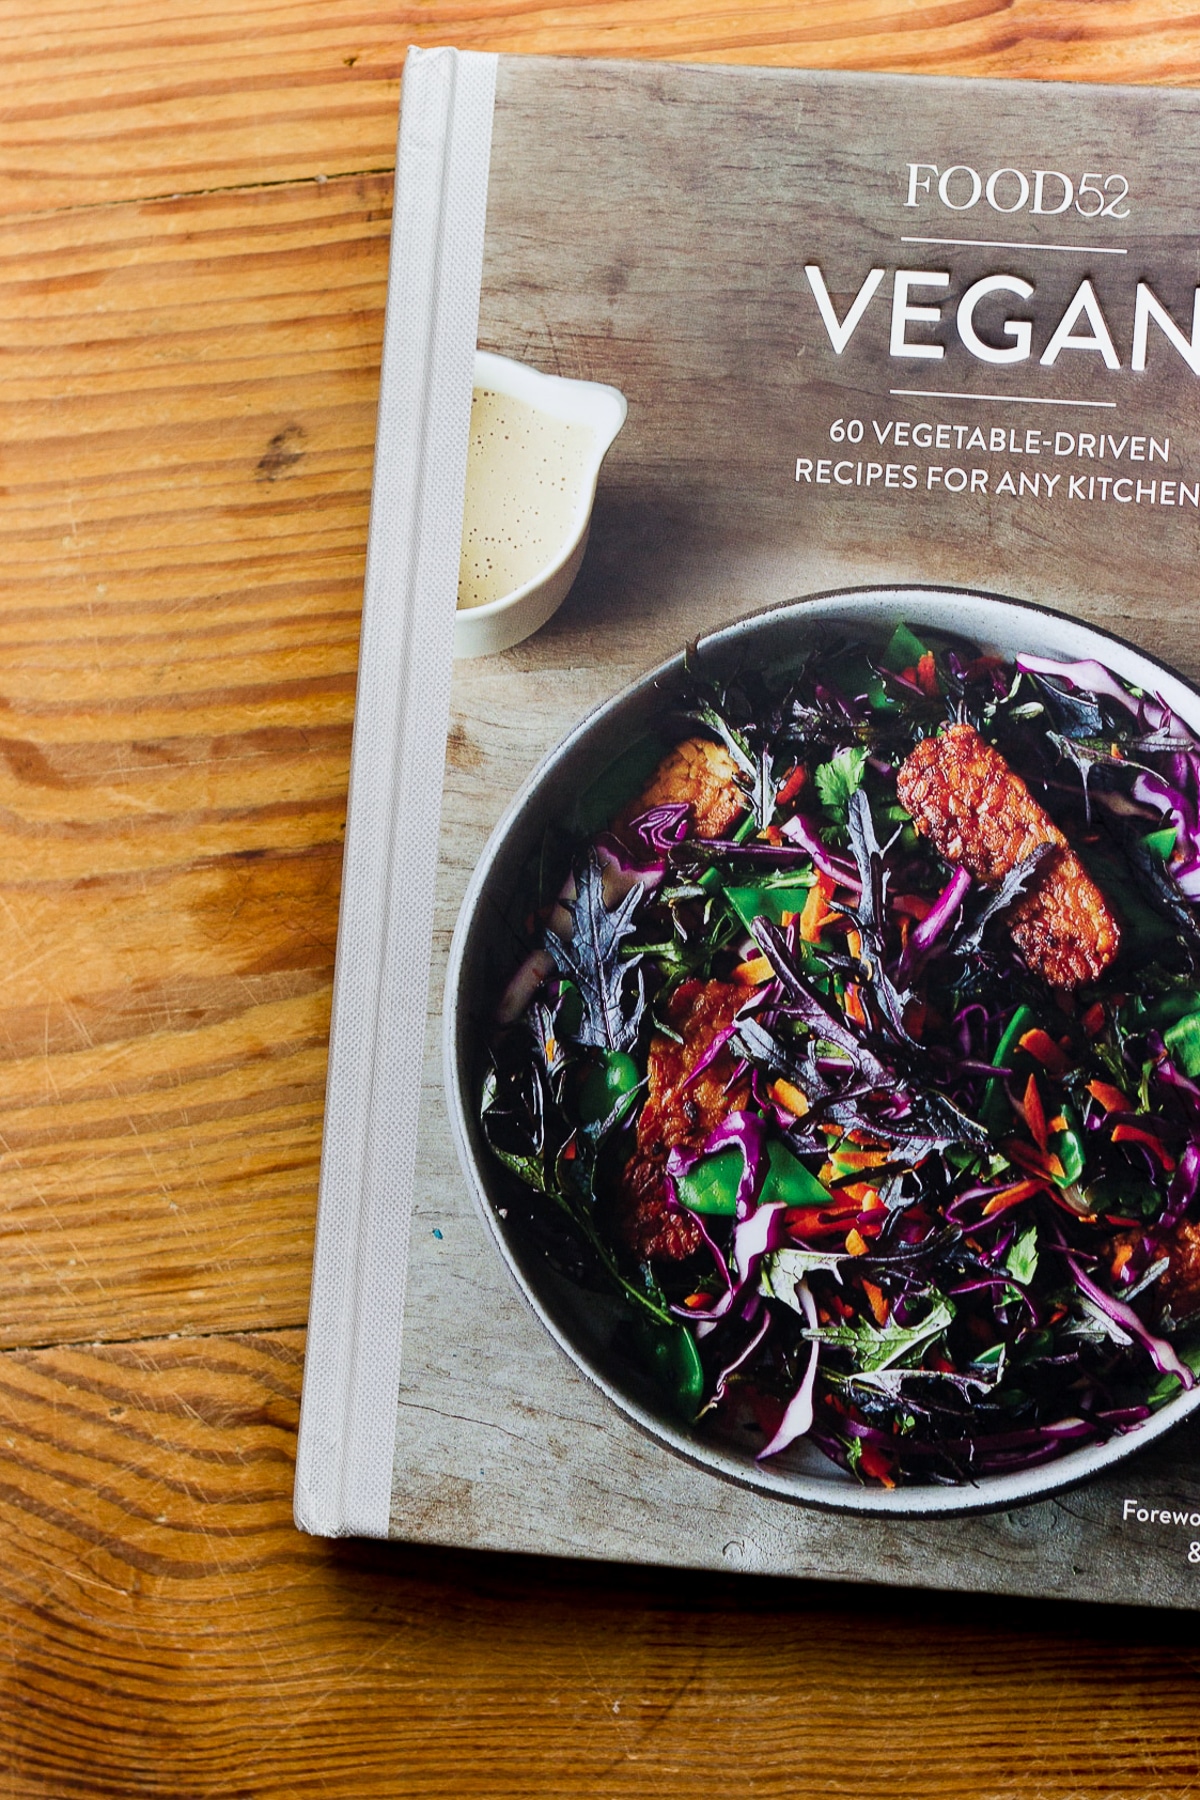 Food52 Vegan cookbook on a wooden table